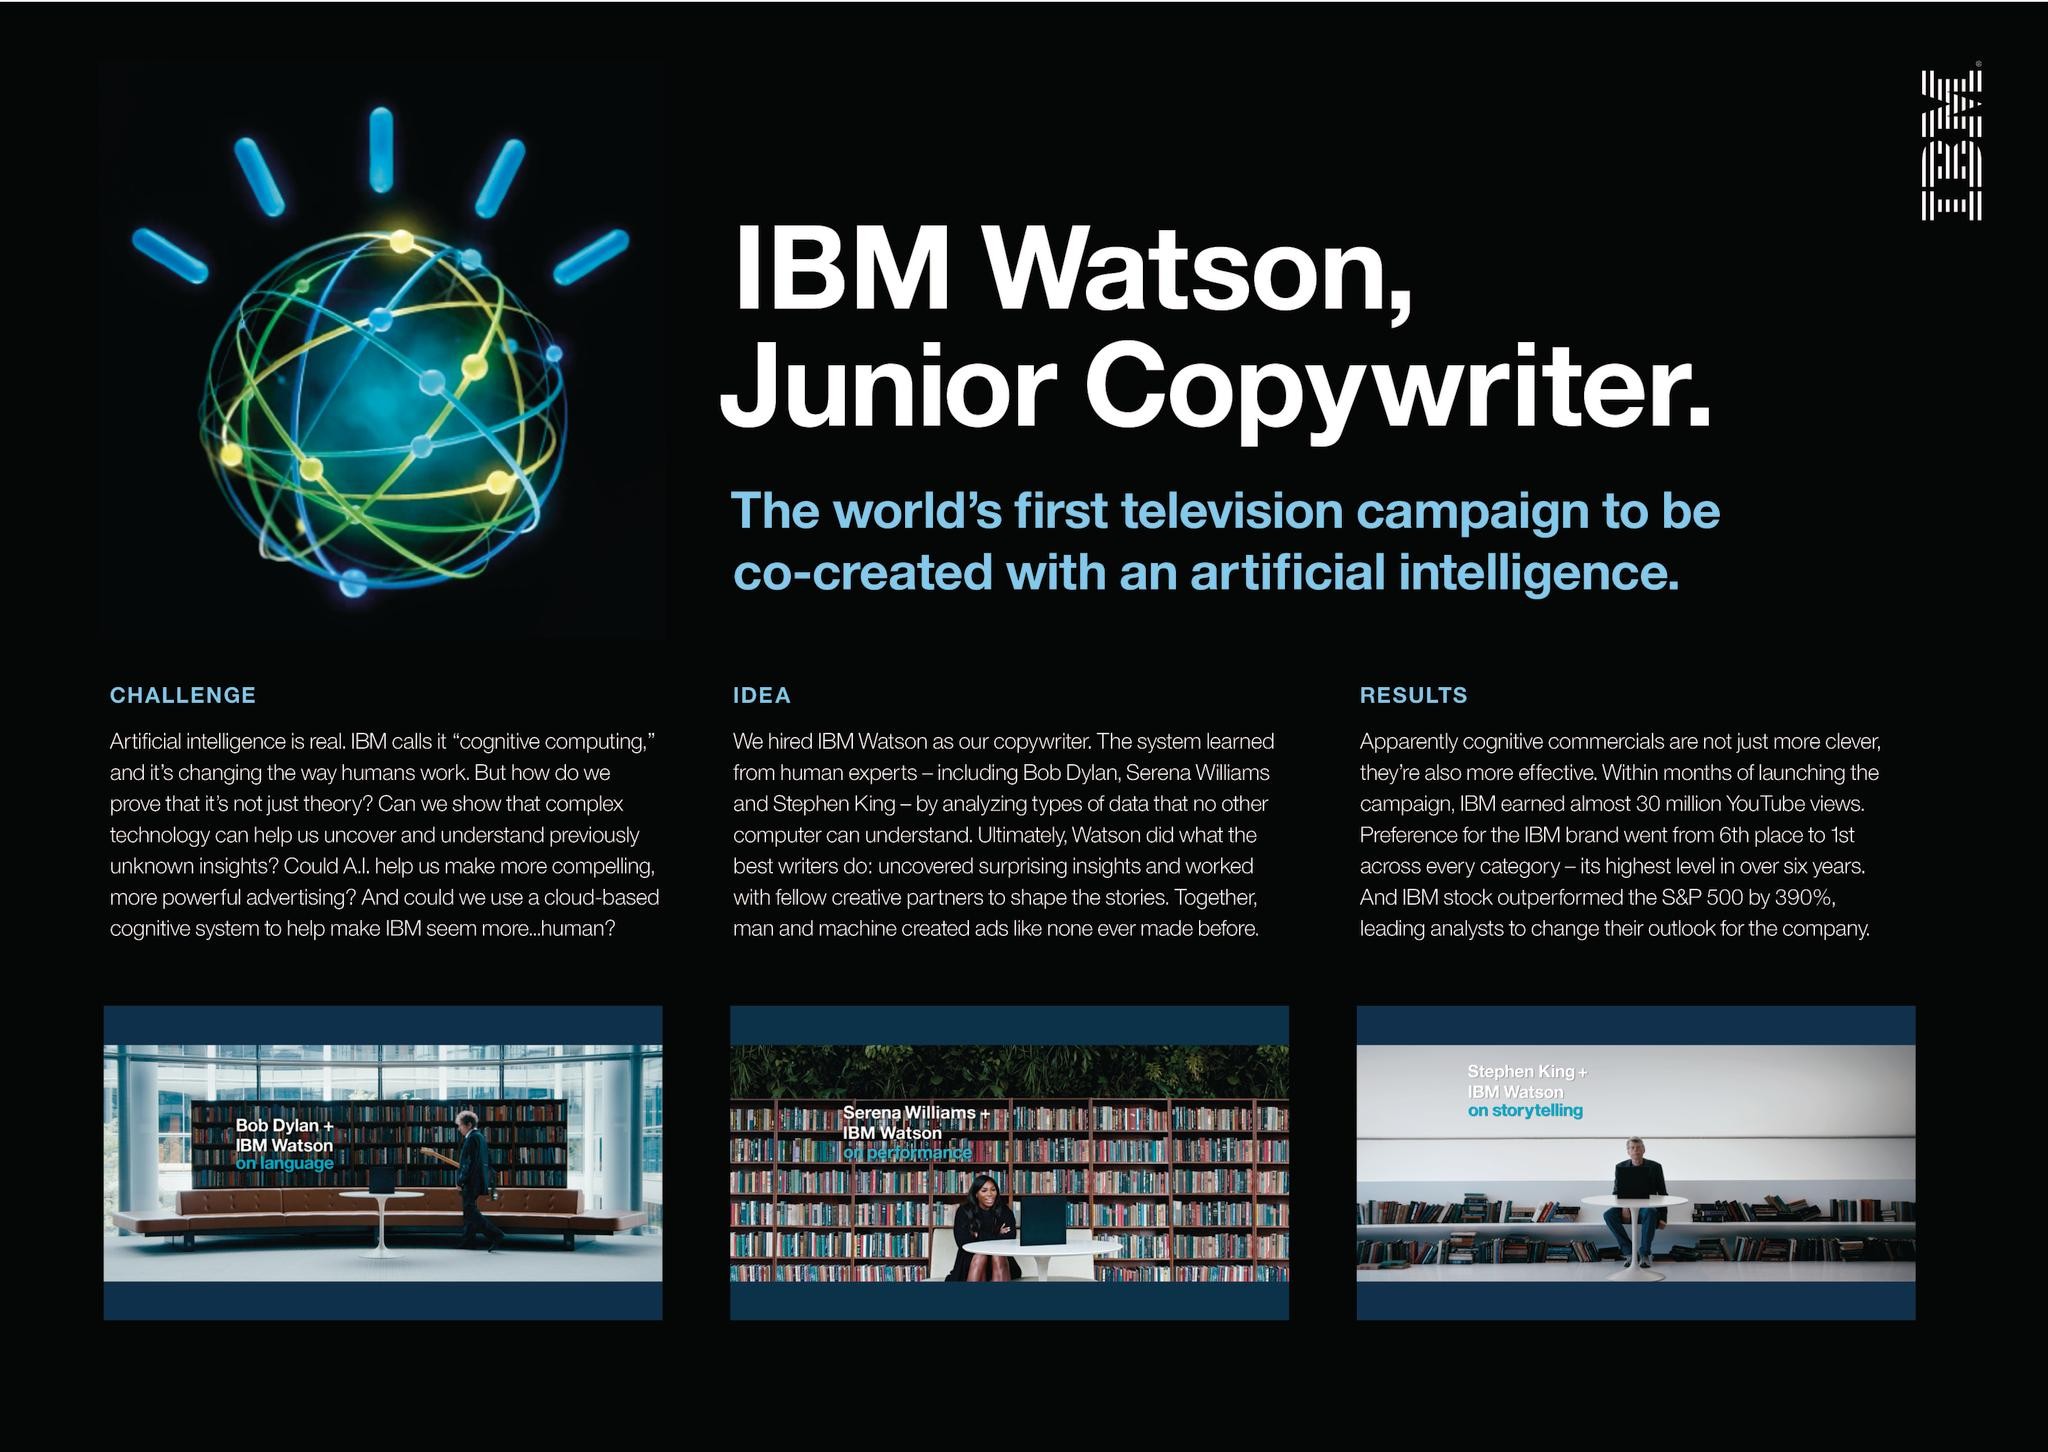 IBM WATSON: JUNIOR COPYWRITER